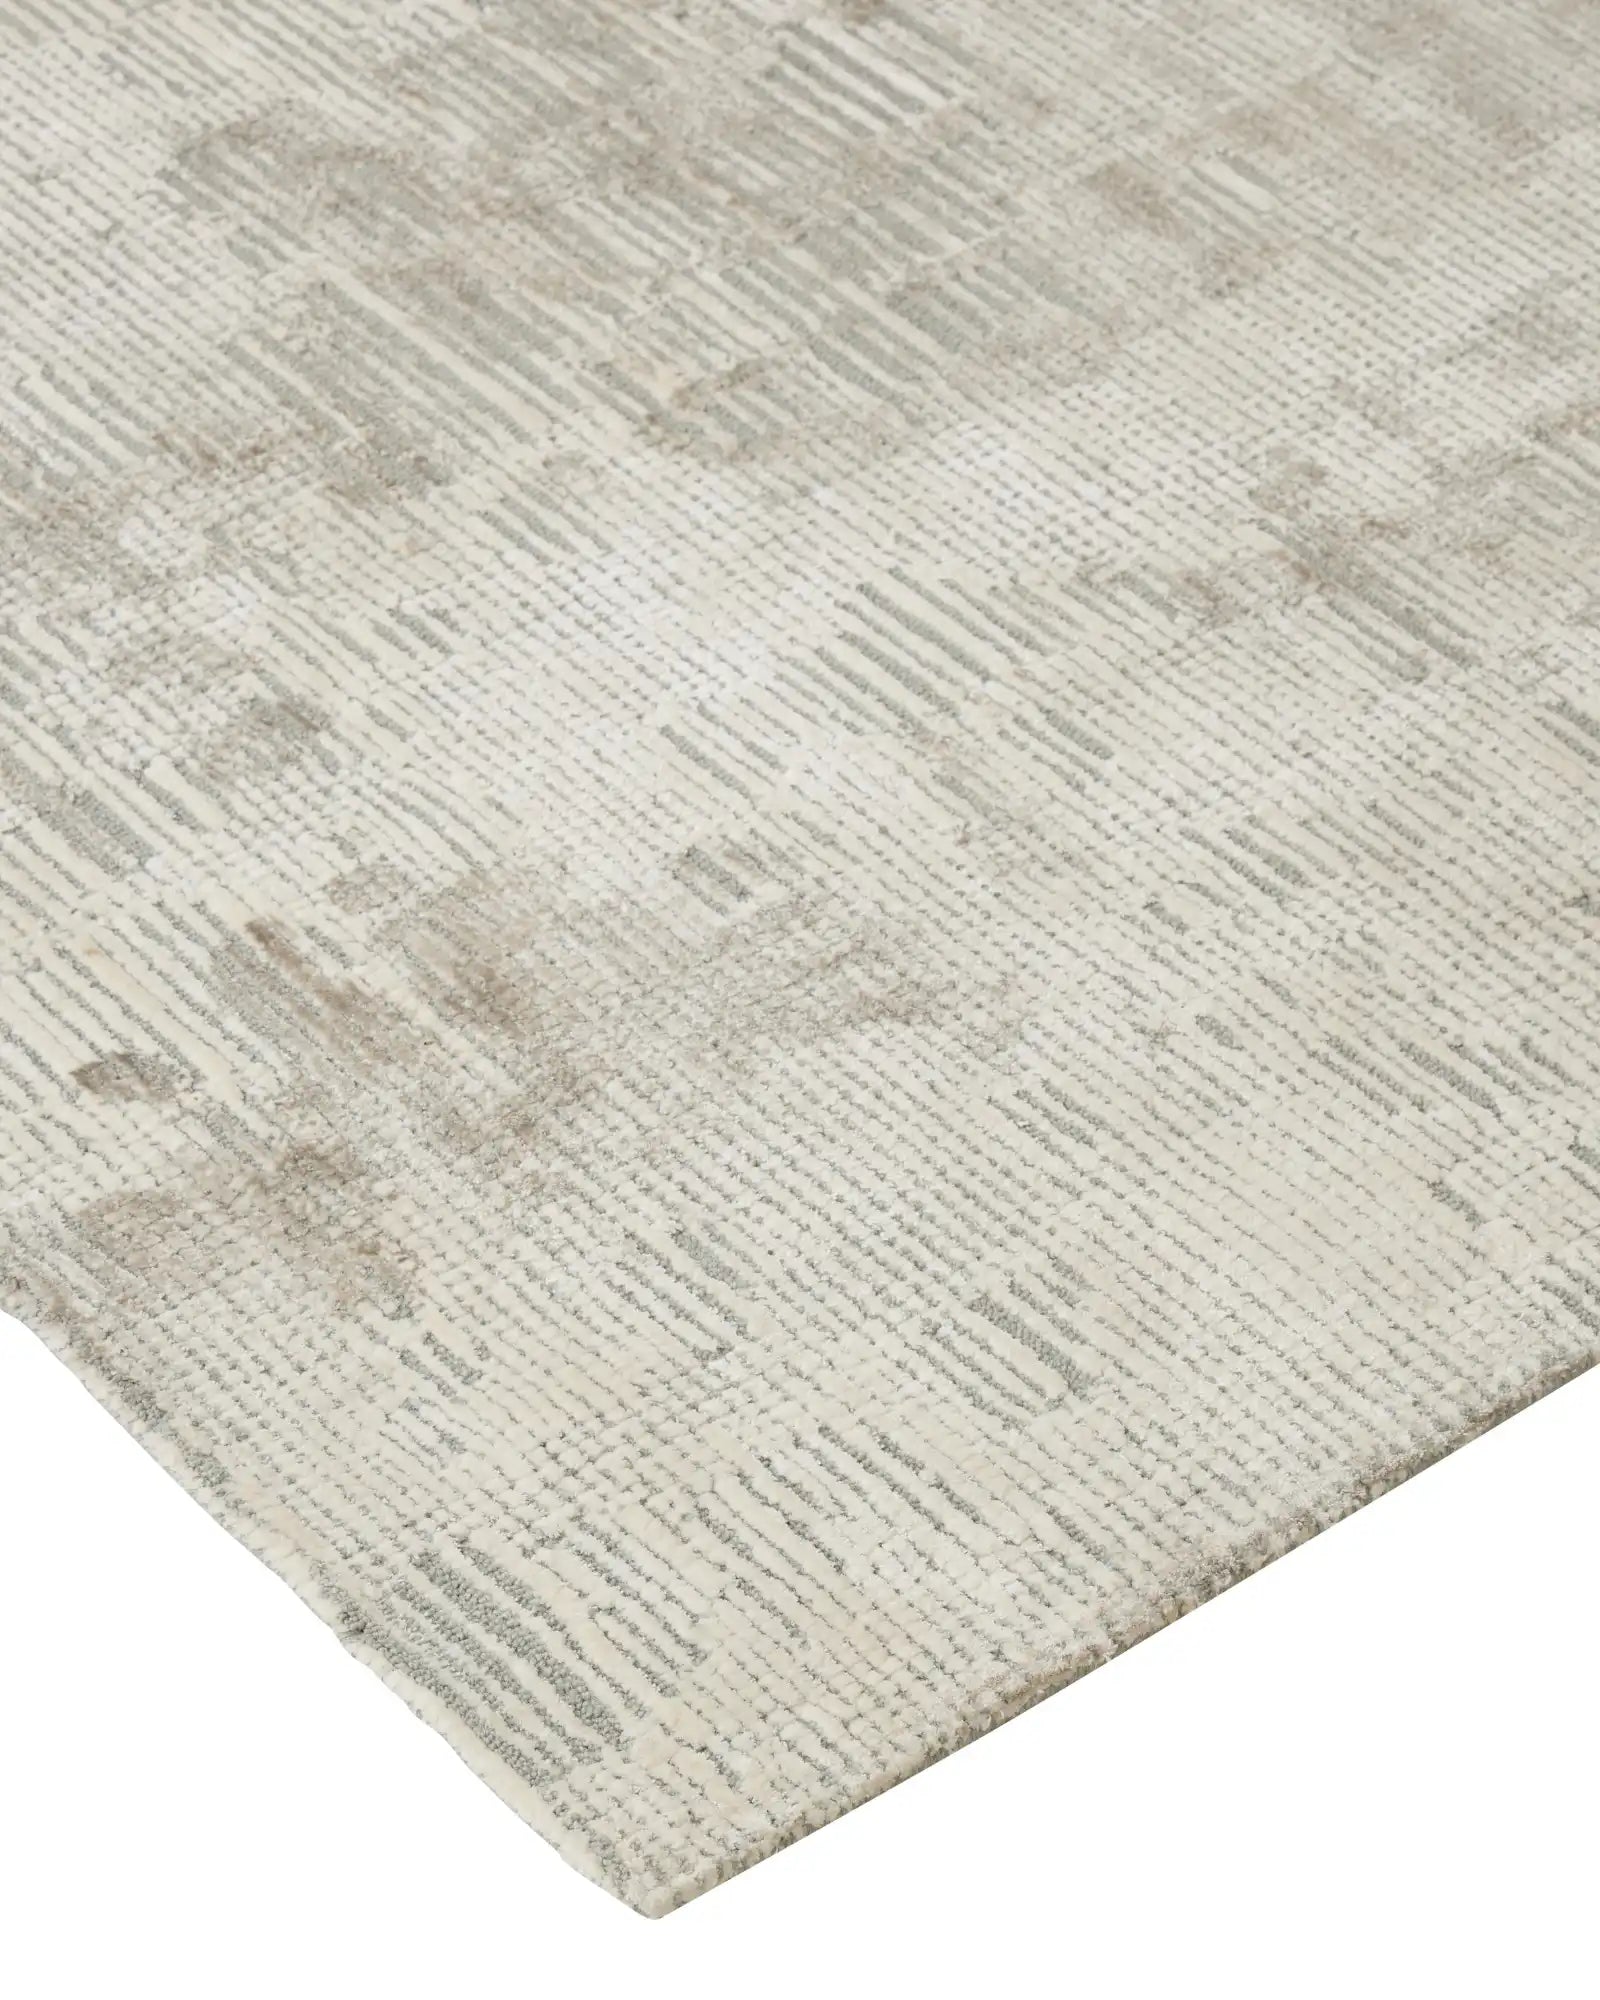 Weave Glebe Floor Rug - Silver RGB02SILV